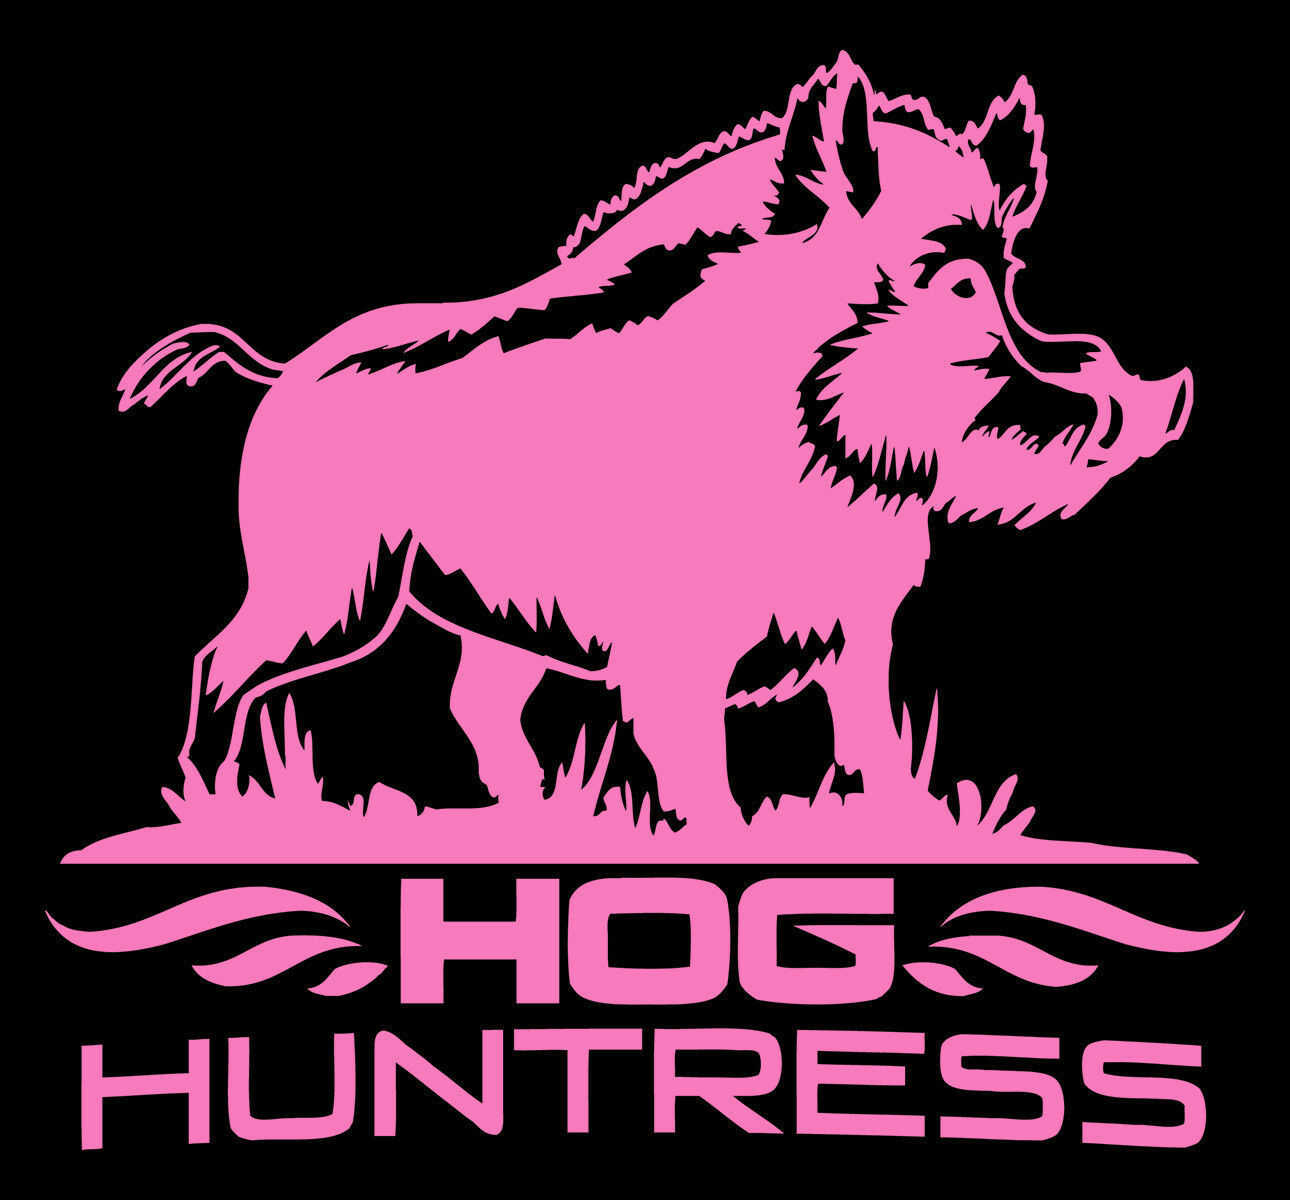 Gametrax Outdoors Hog hunting decal,Hog Huntress,women's hunting sticker